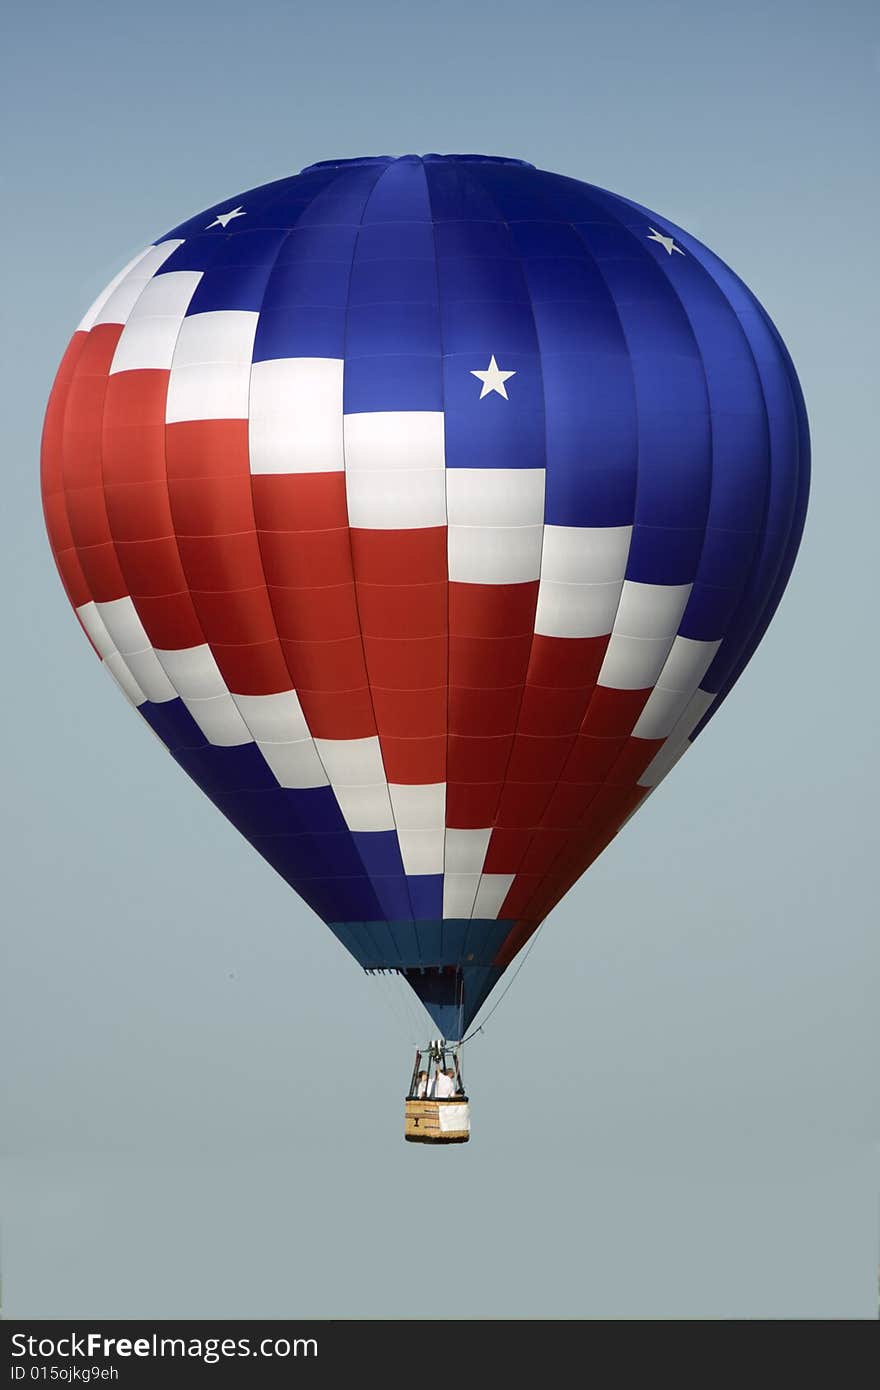 Hot air balloon in flight